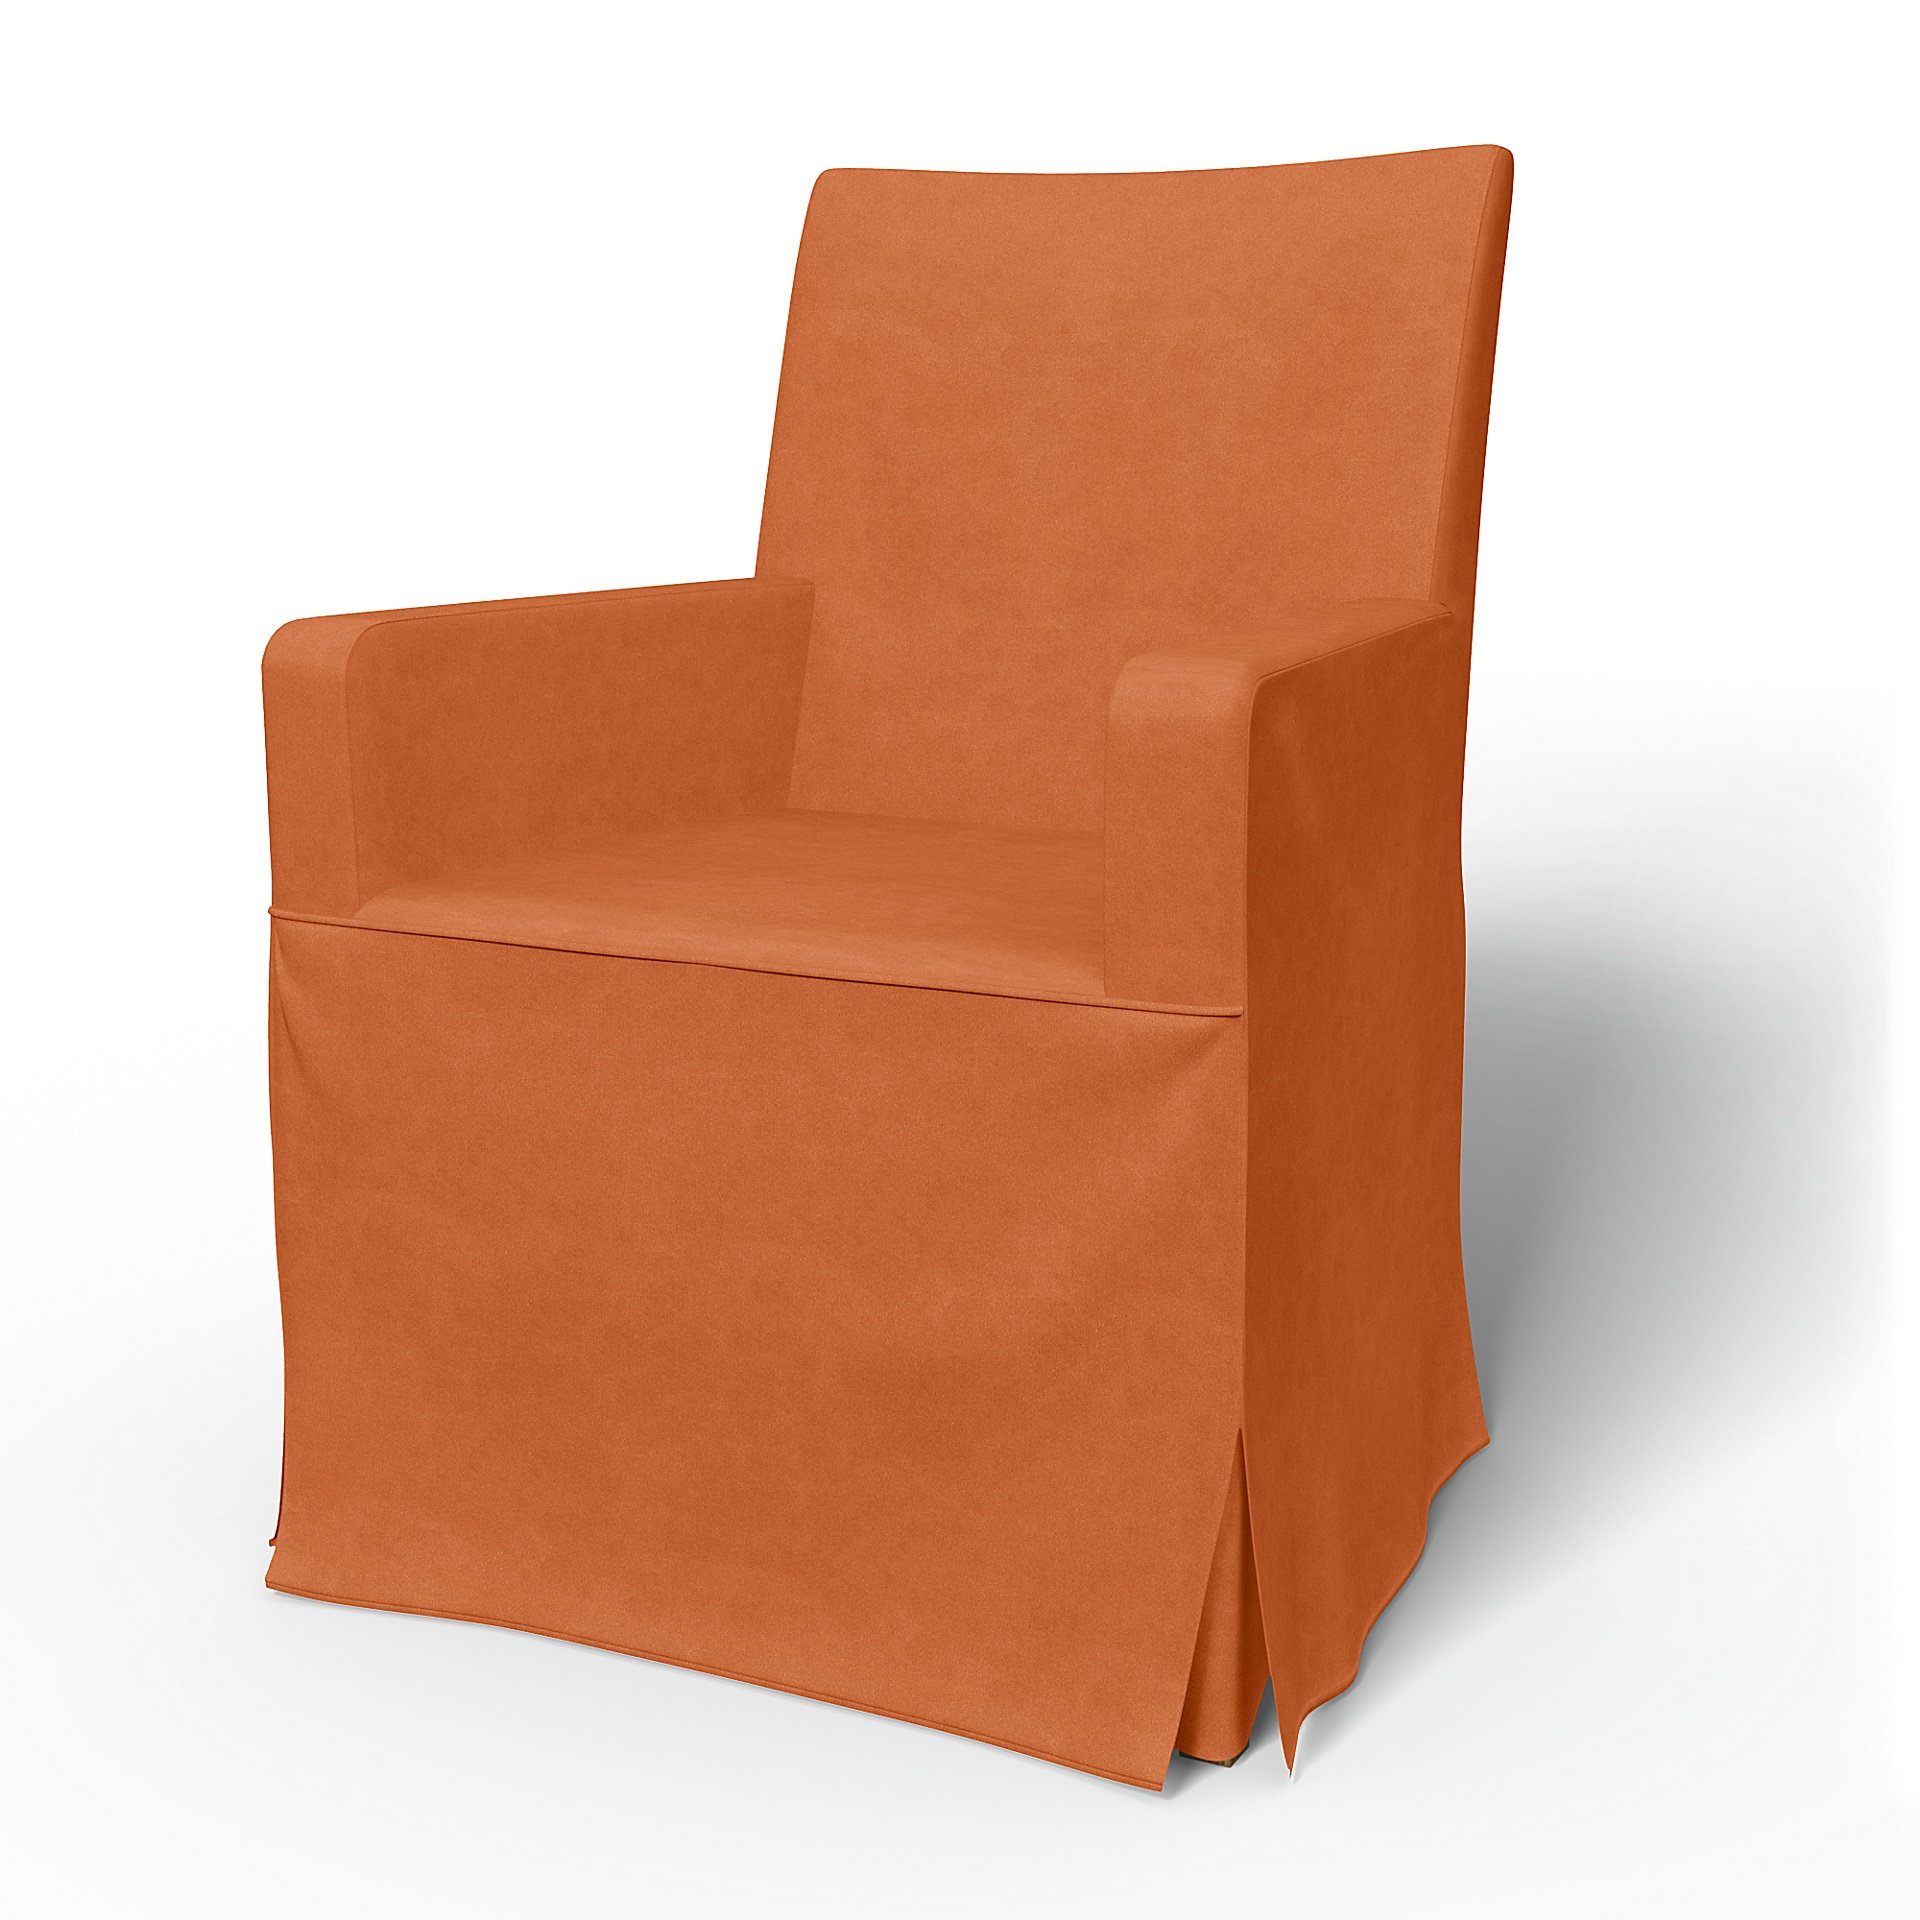 IKEA - Henriksdal, Chair cover w/ armrests, long skirt box pleat, Rust, Outdoor - Bemz